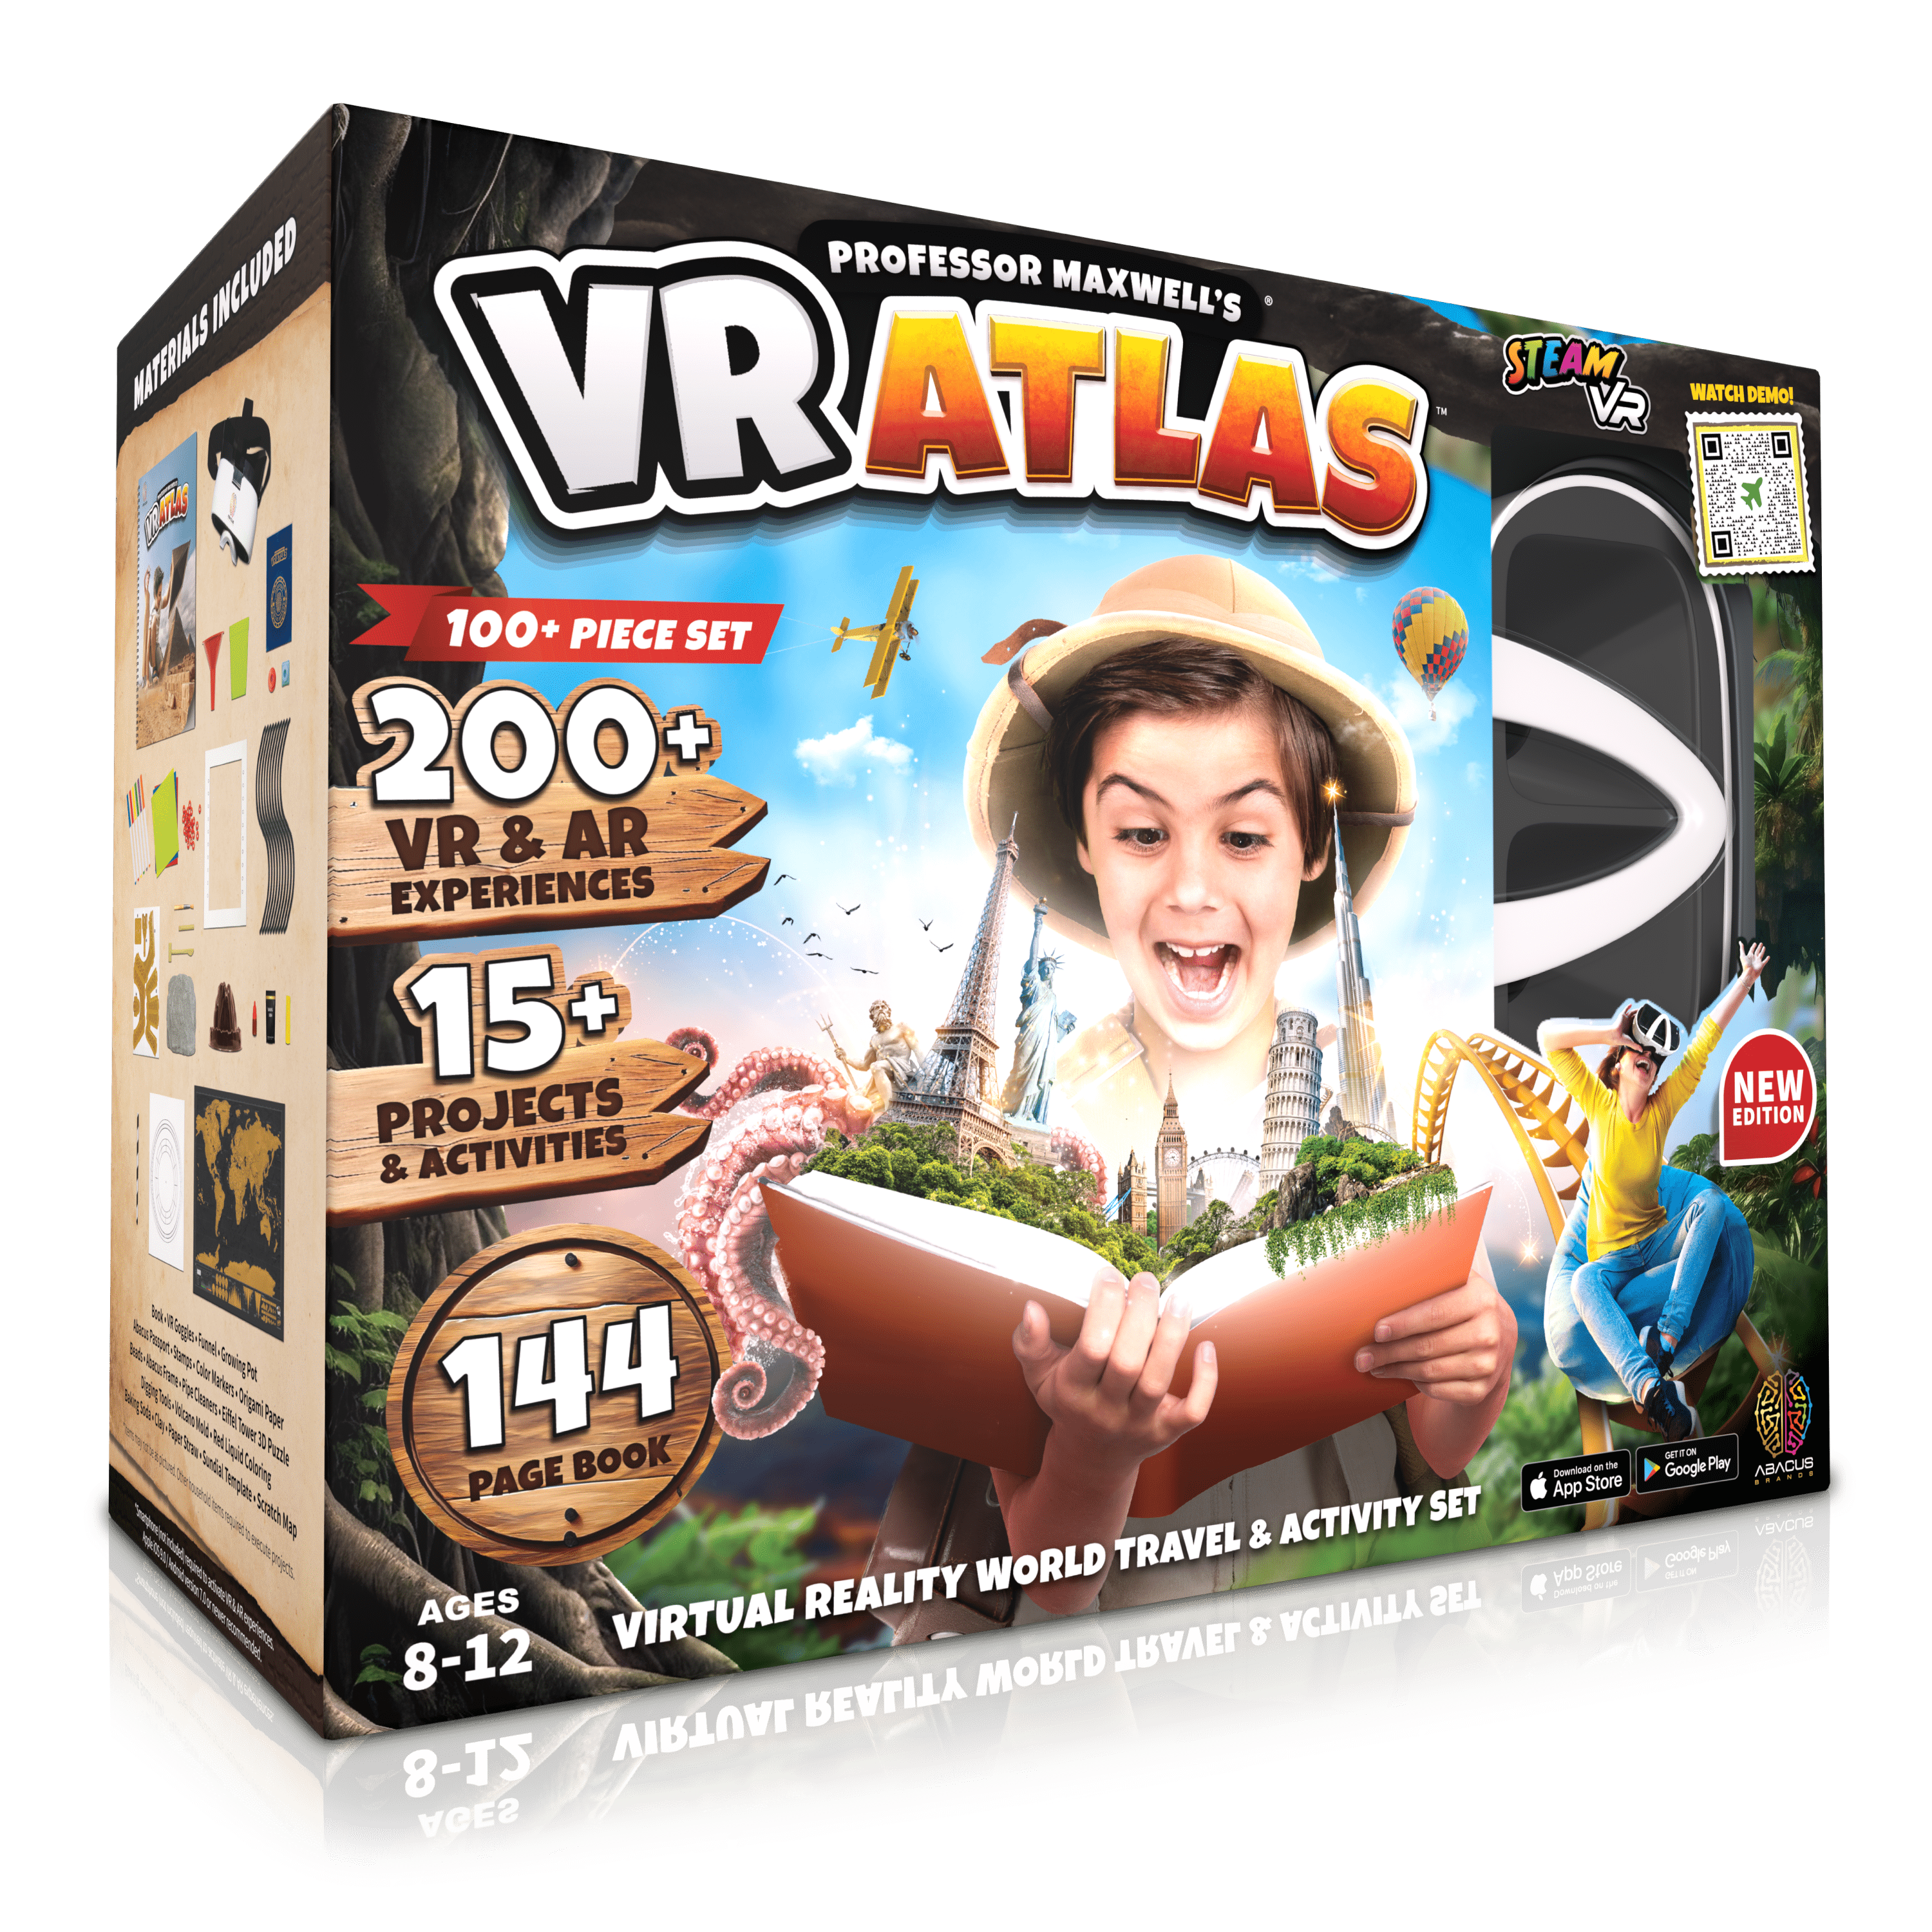 Professor Maxwell's Virtual Reality World Travel Activity Kit - VR Atlas